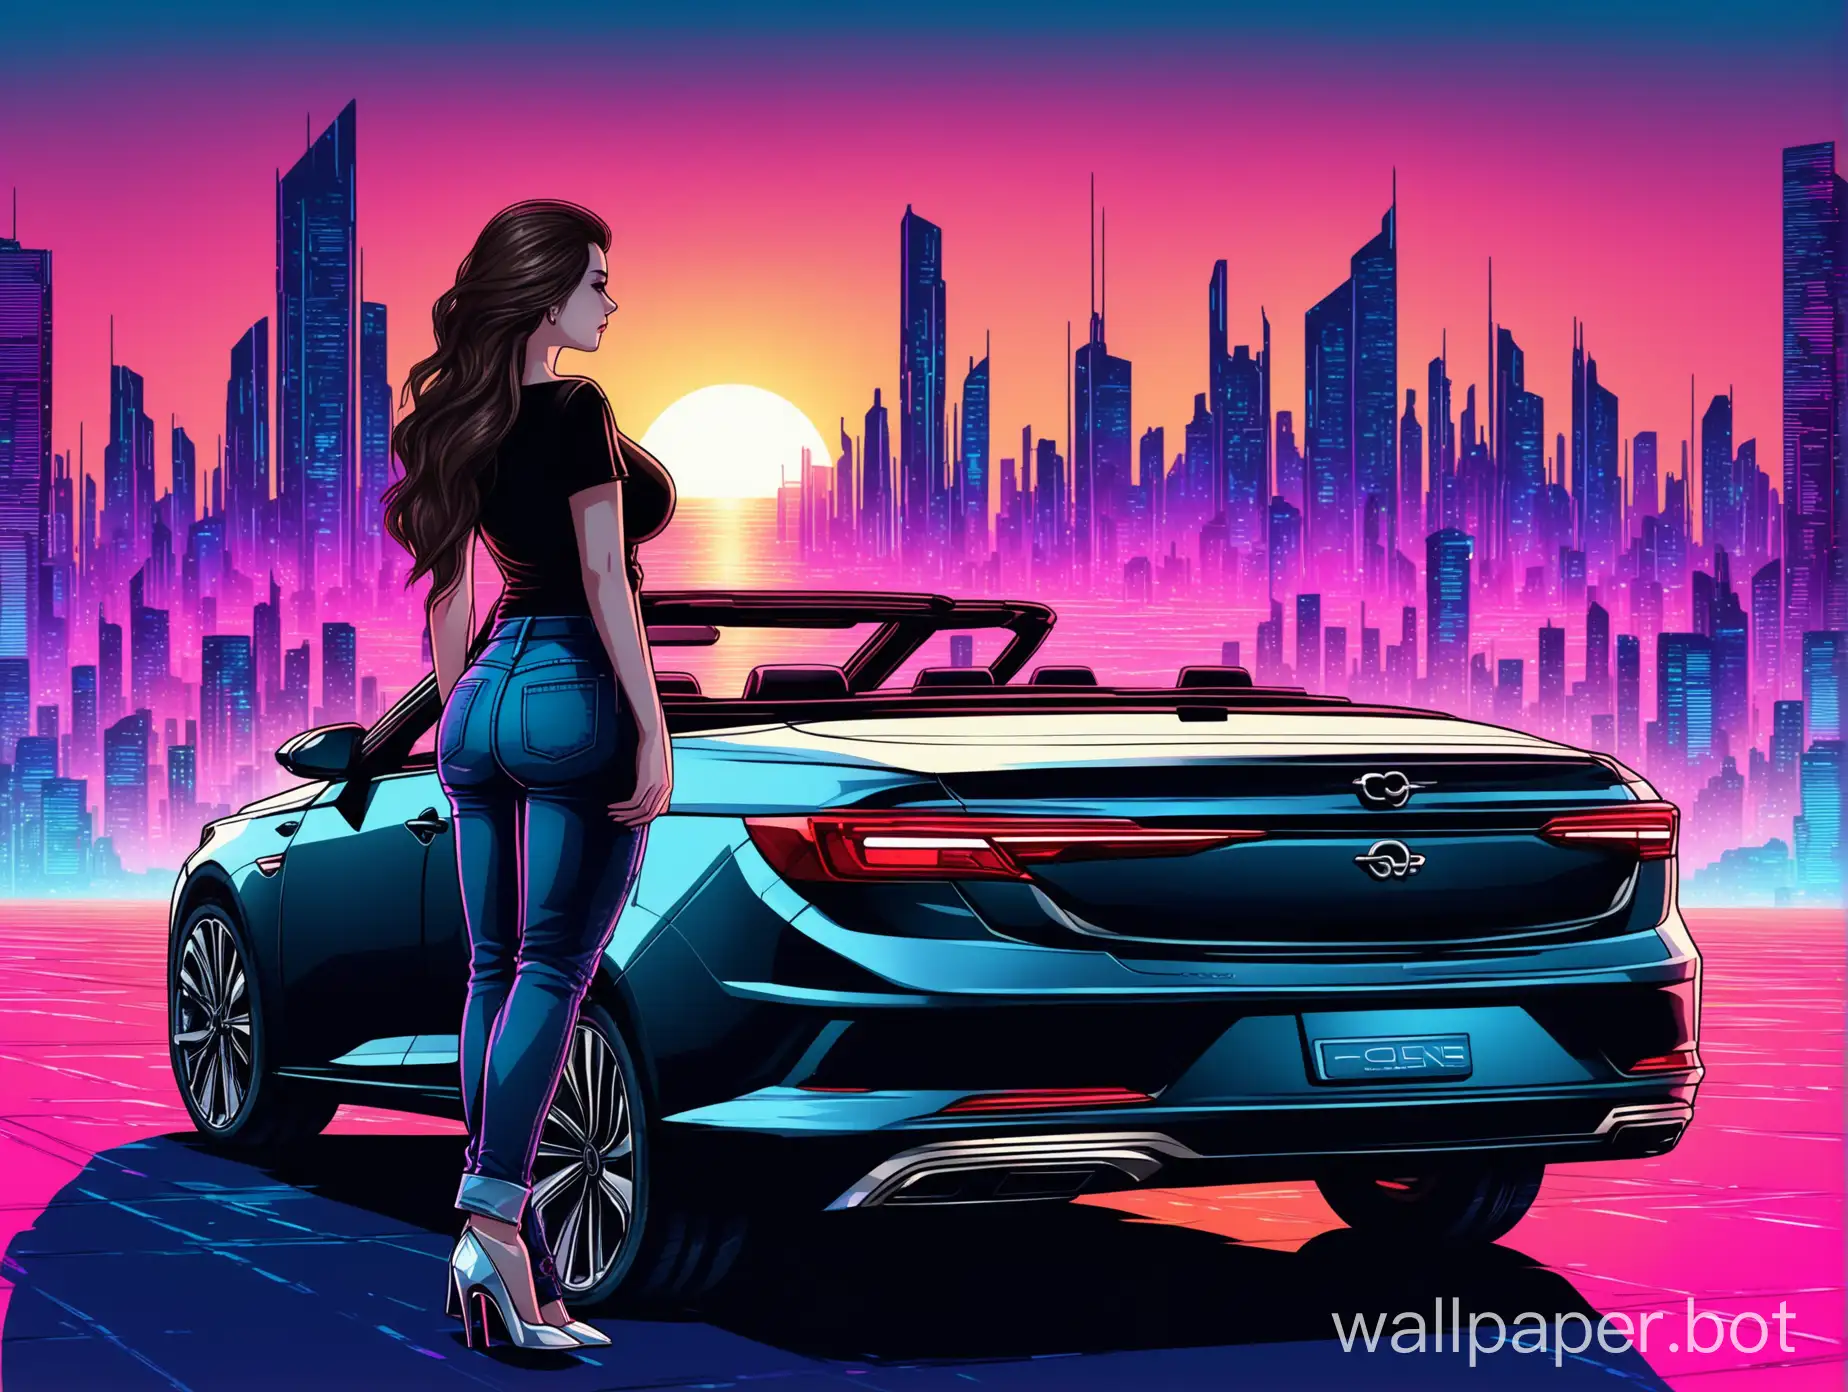 DarkHaired-Woman-by-Opel-Insignia-Grandsport-in-Futuristic-City-Sunset